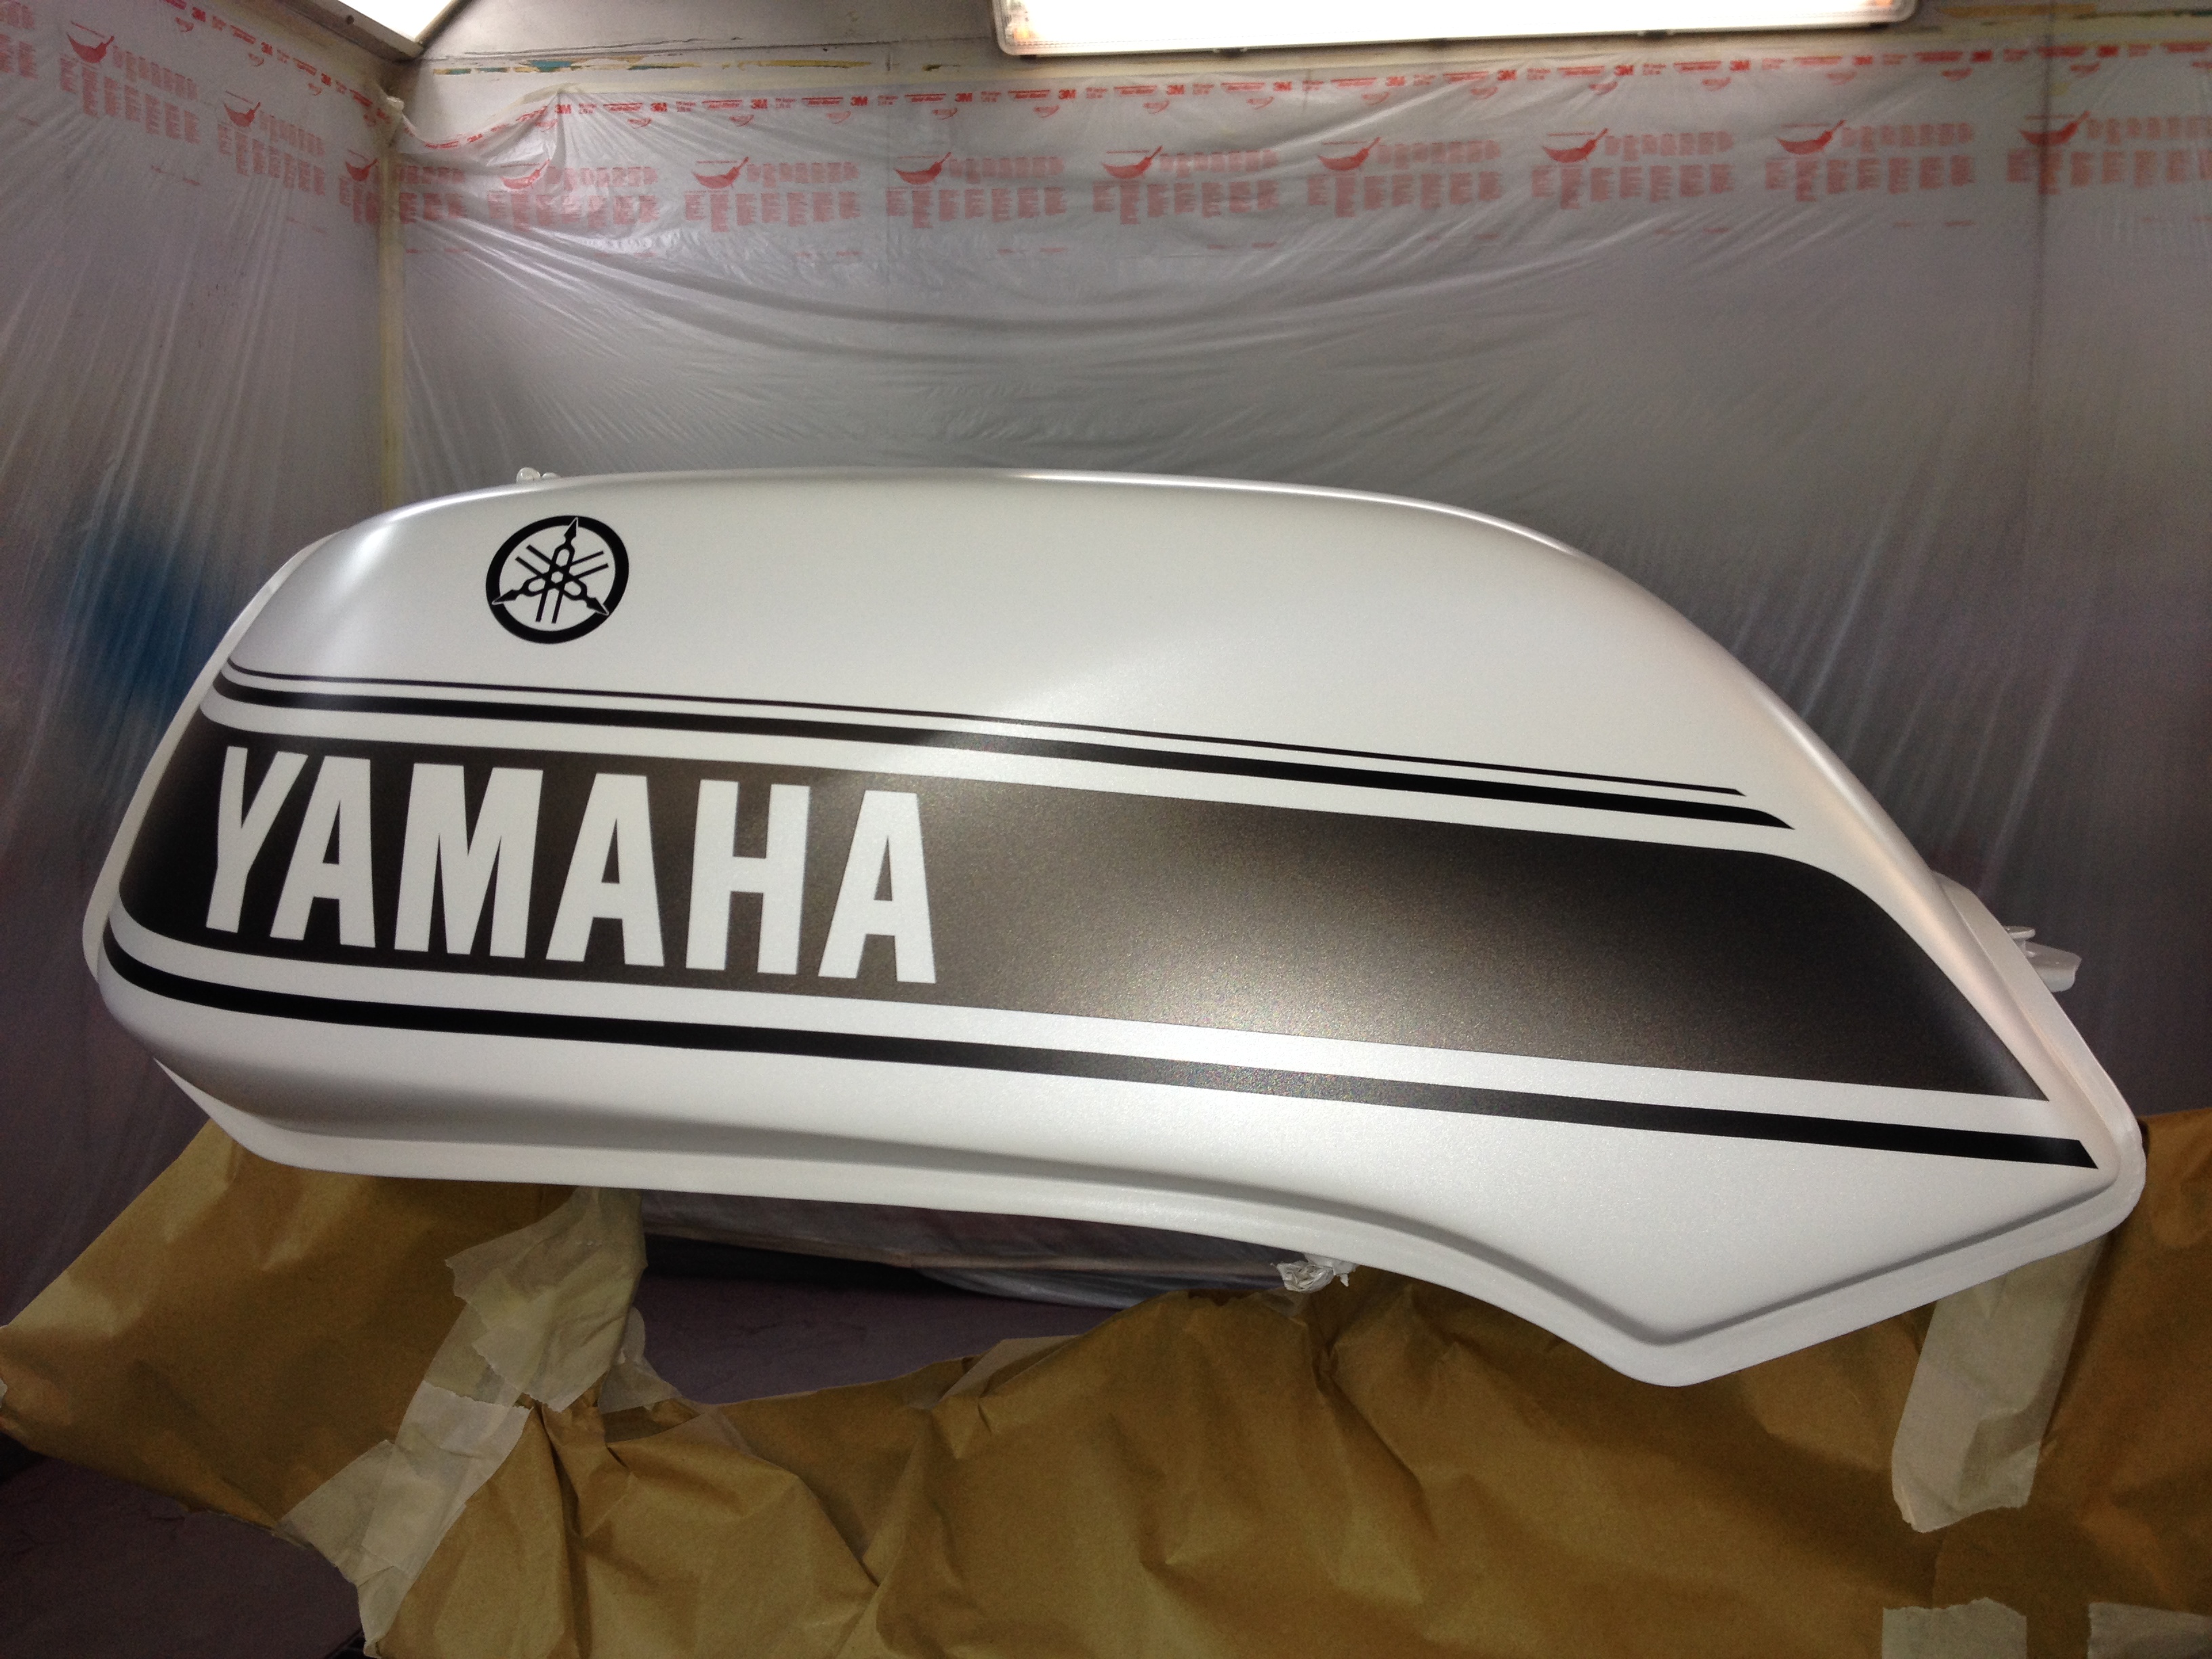 Yamaha XJ Cafè Racer